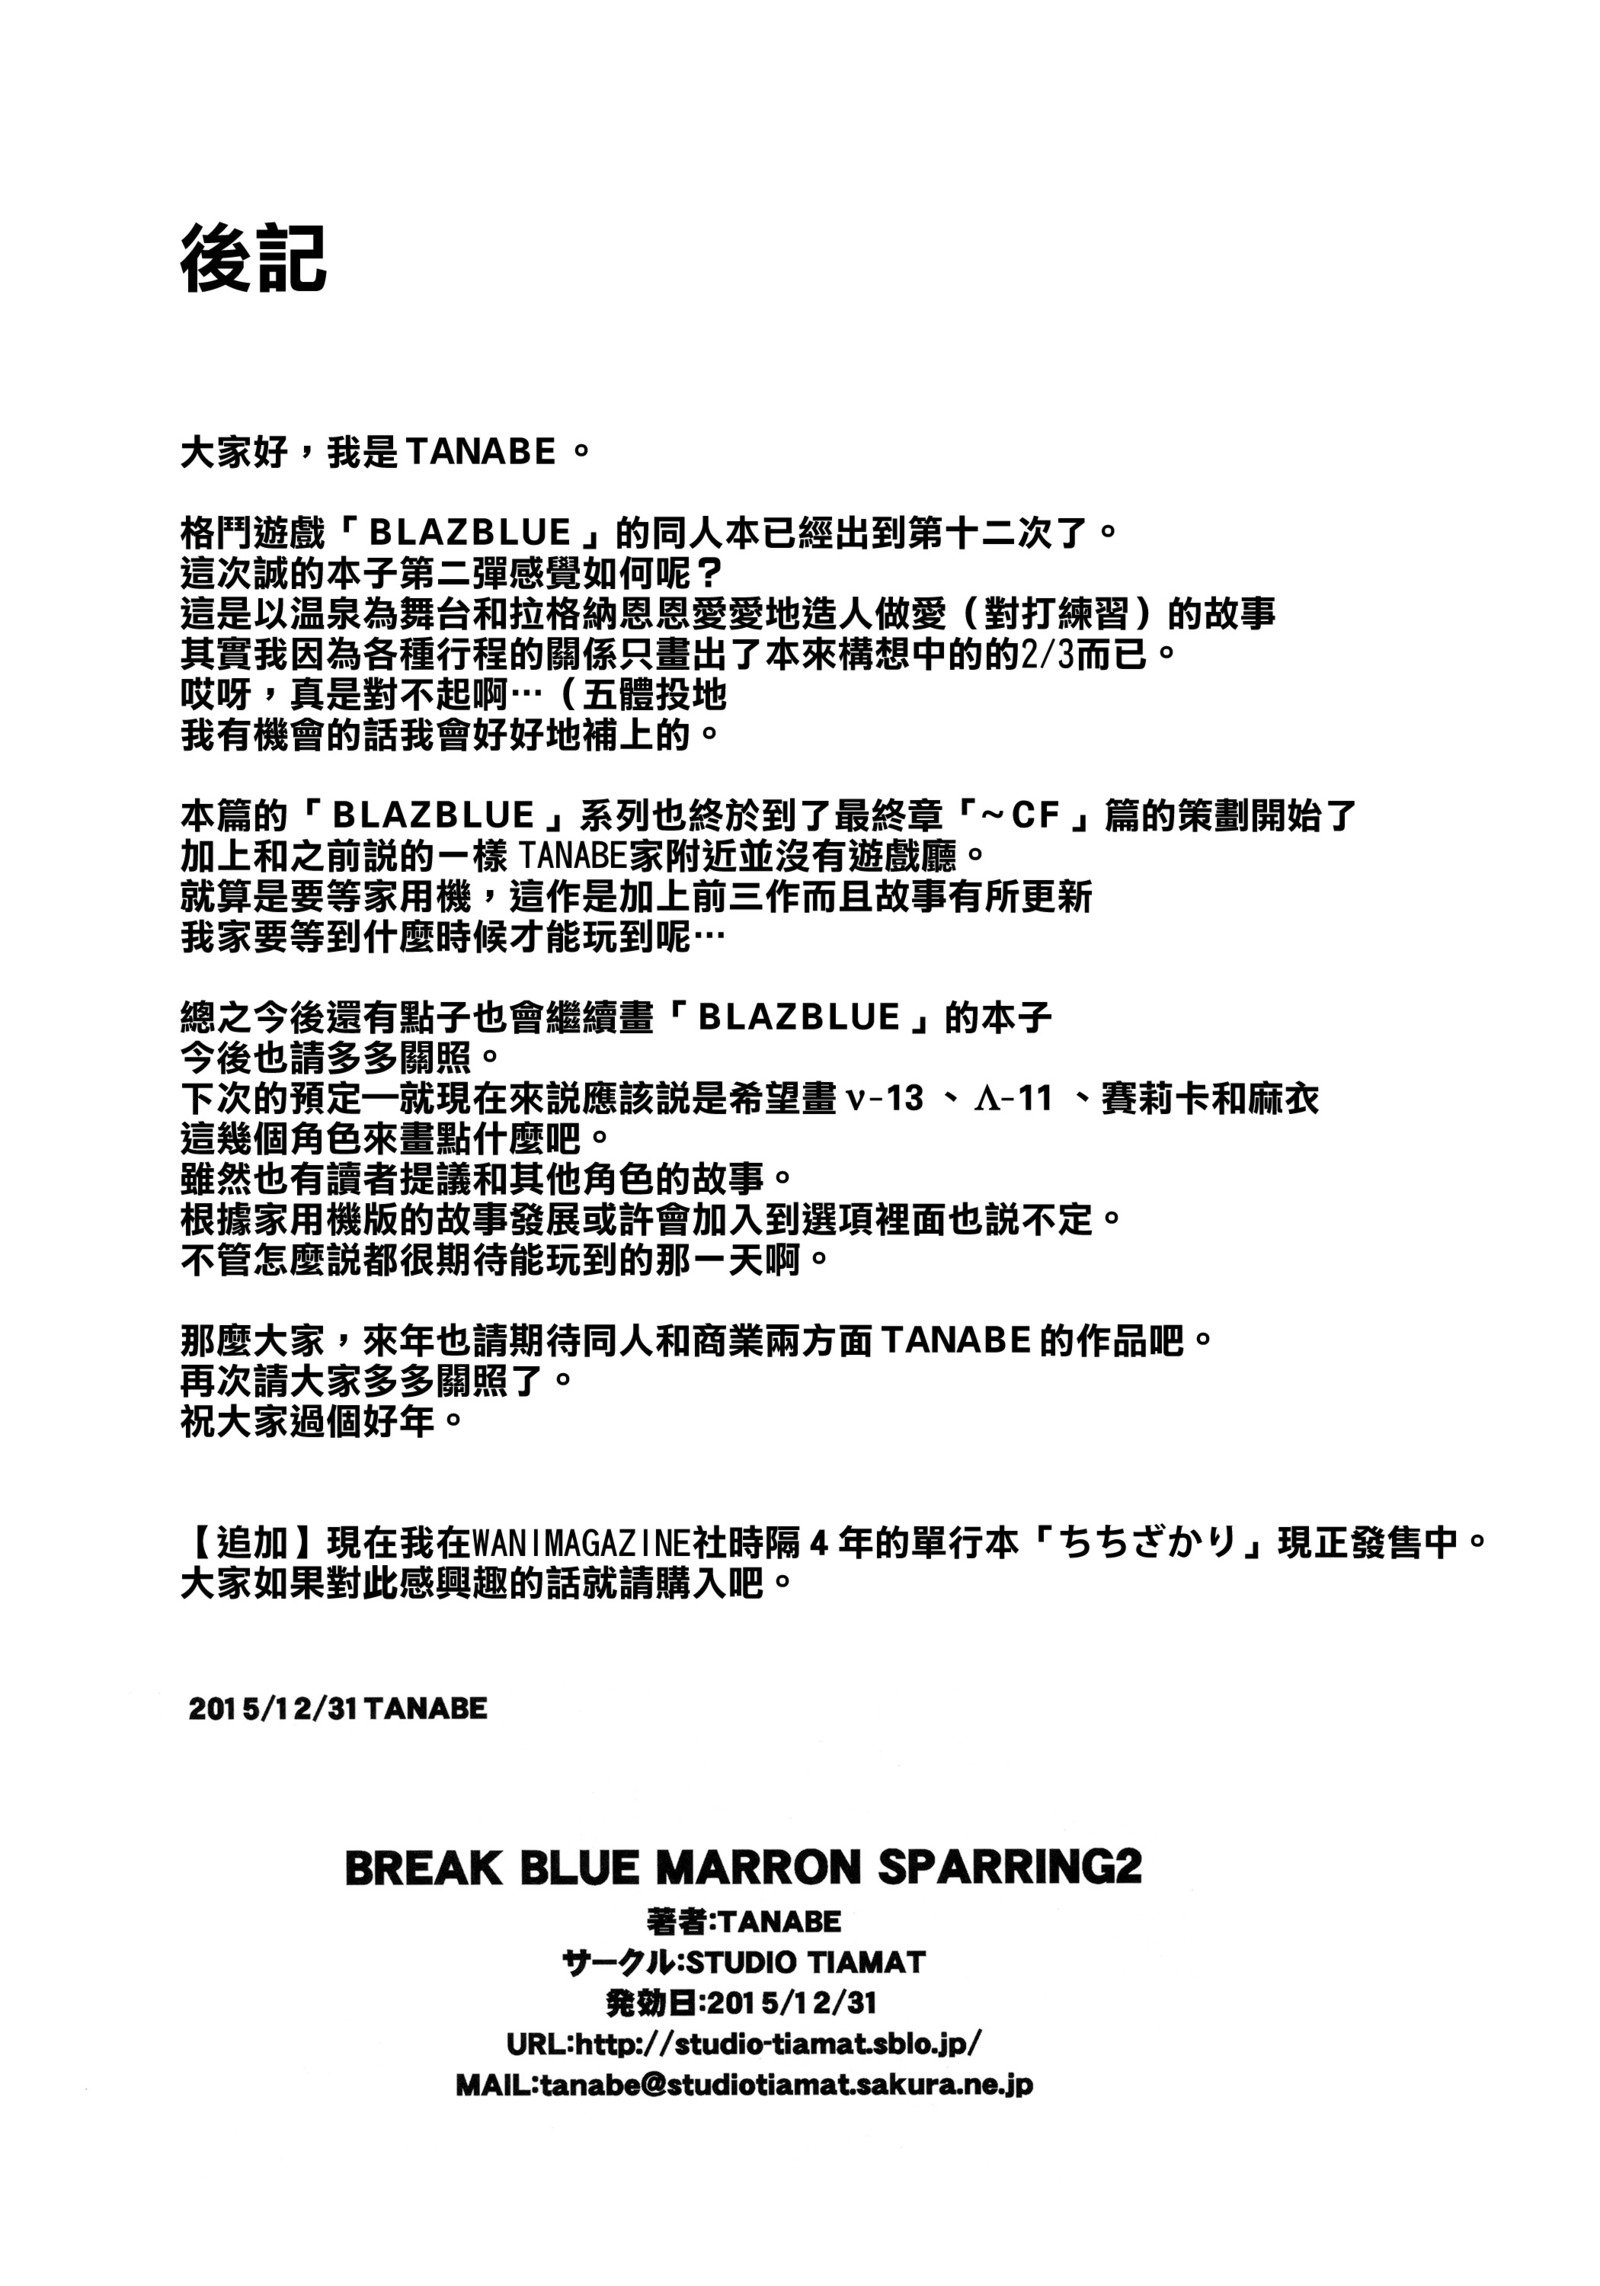 BREAK BLUE MARRON SPARRING2